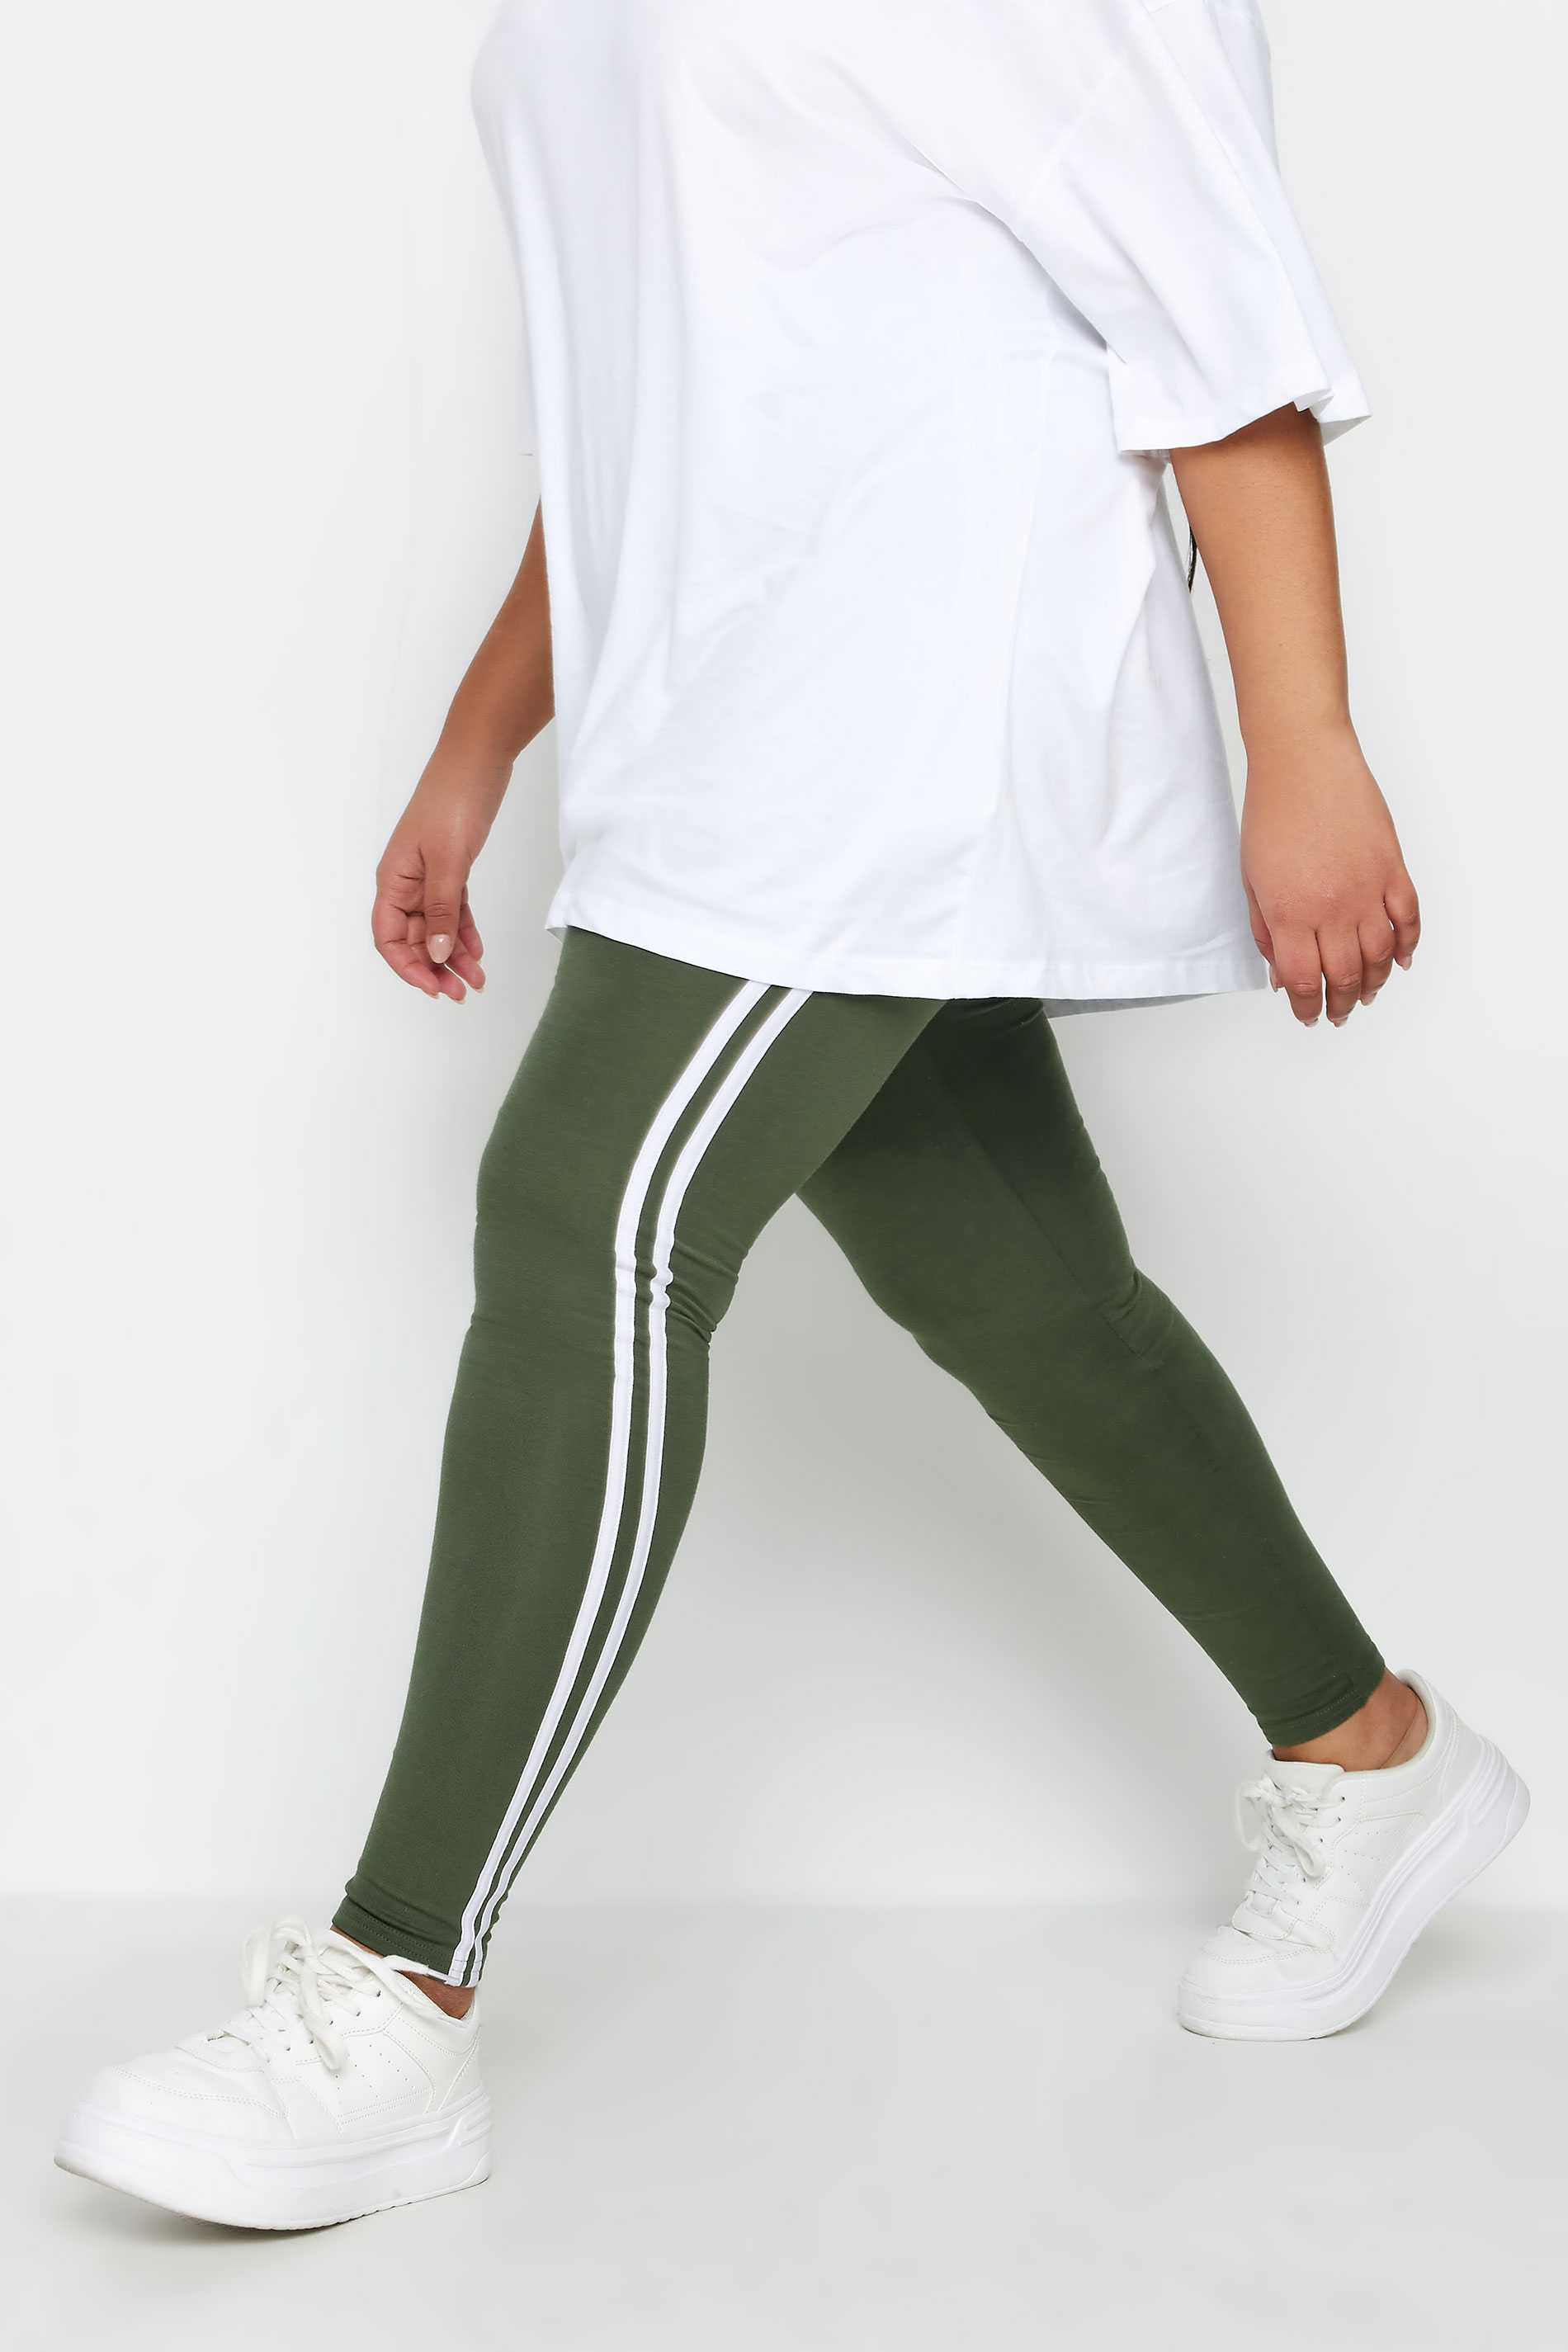 YOURS Plus Size Khaki Green Side Stripe Leggings | Yours Clothing 1